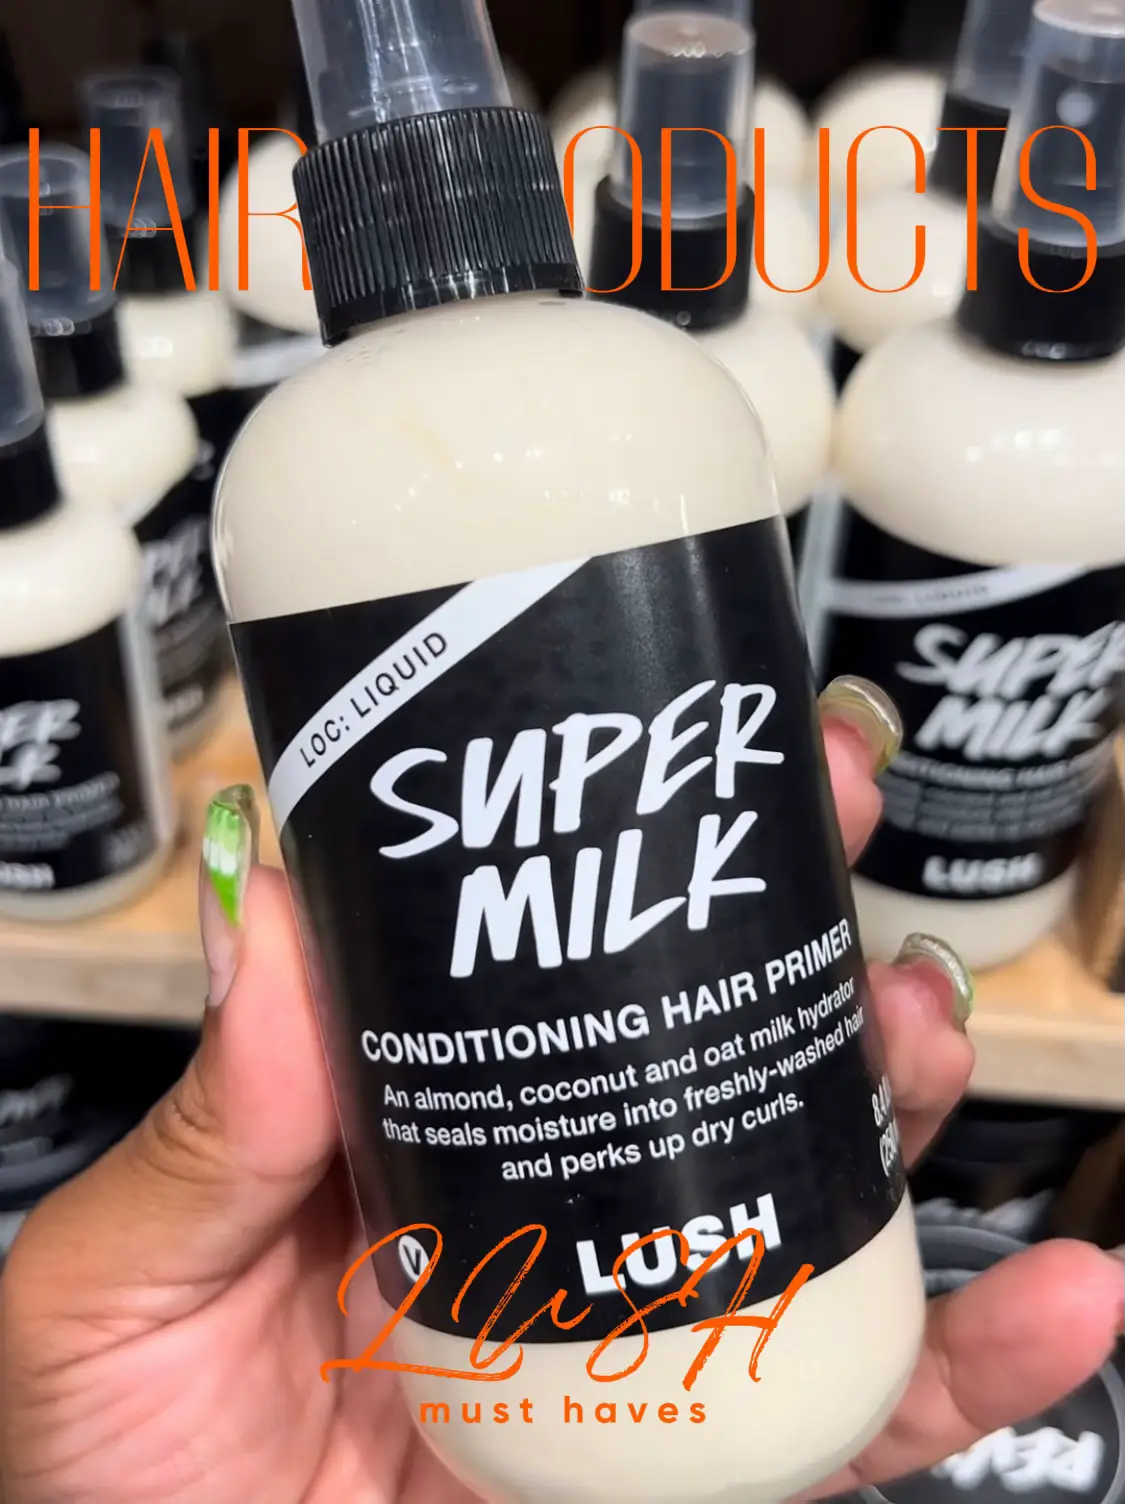 The Lush super milk perfume #lush #supermilk #lushsupermilk